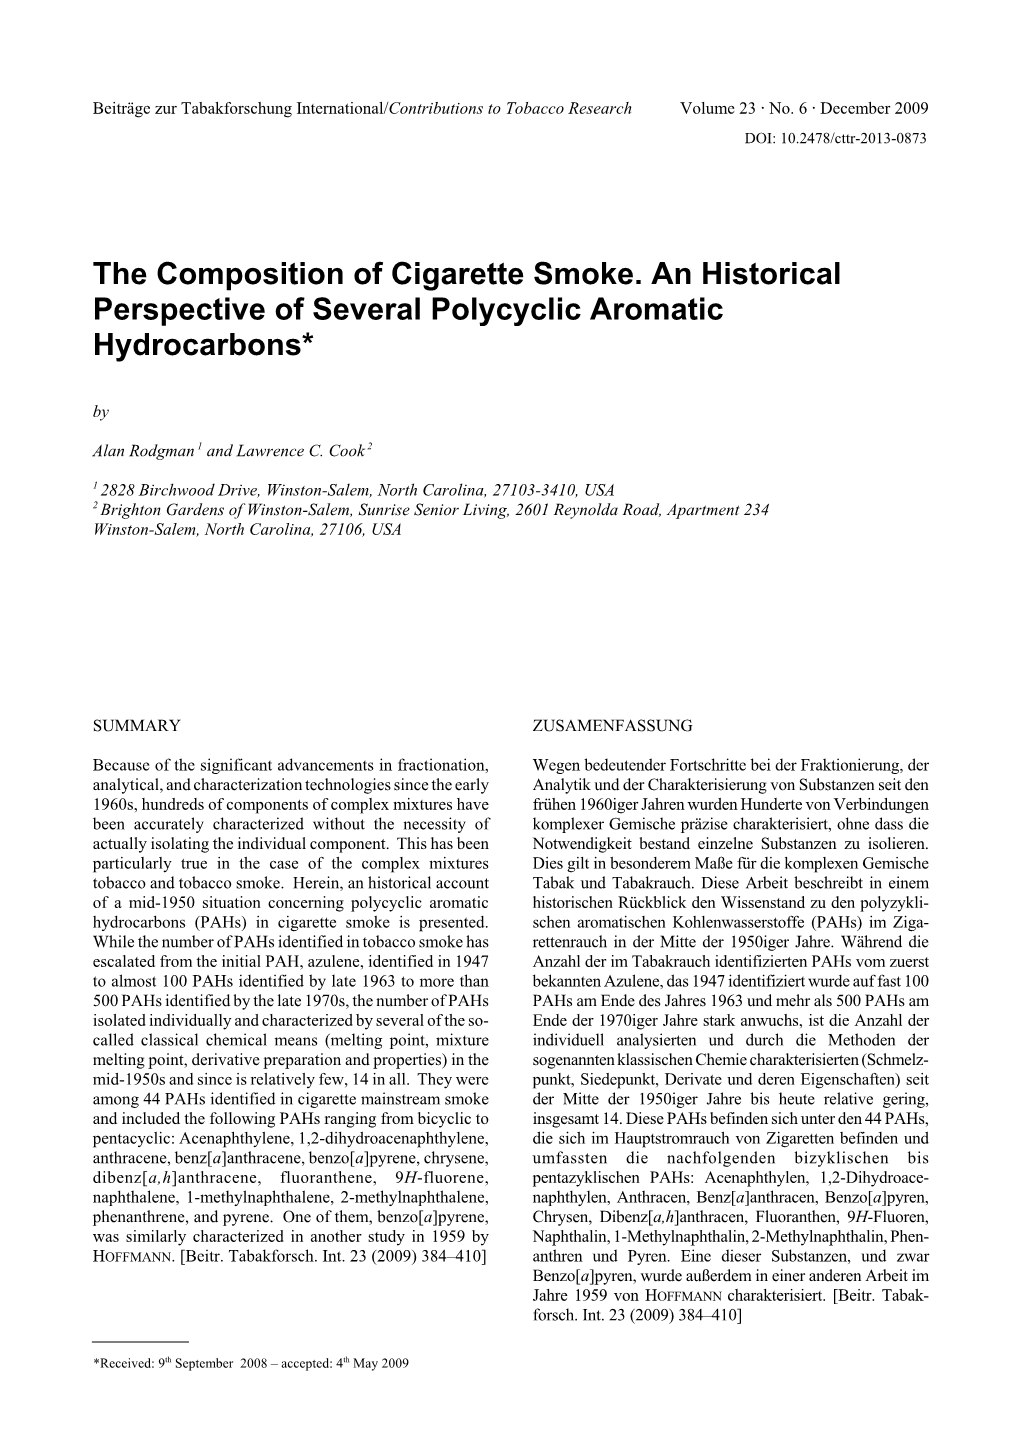 The Composition of Cigarette Smoke